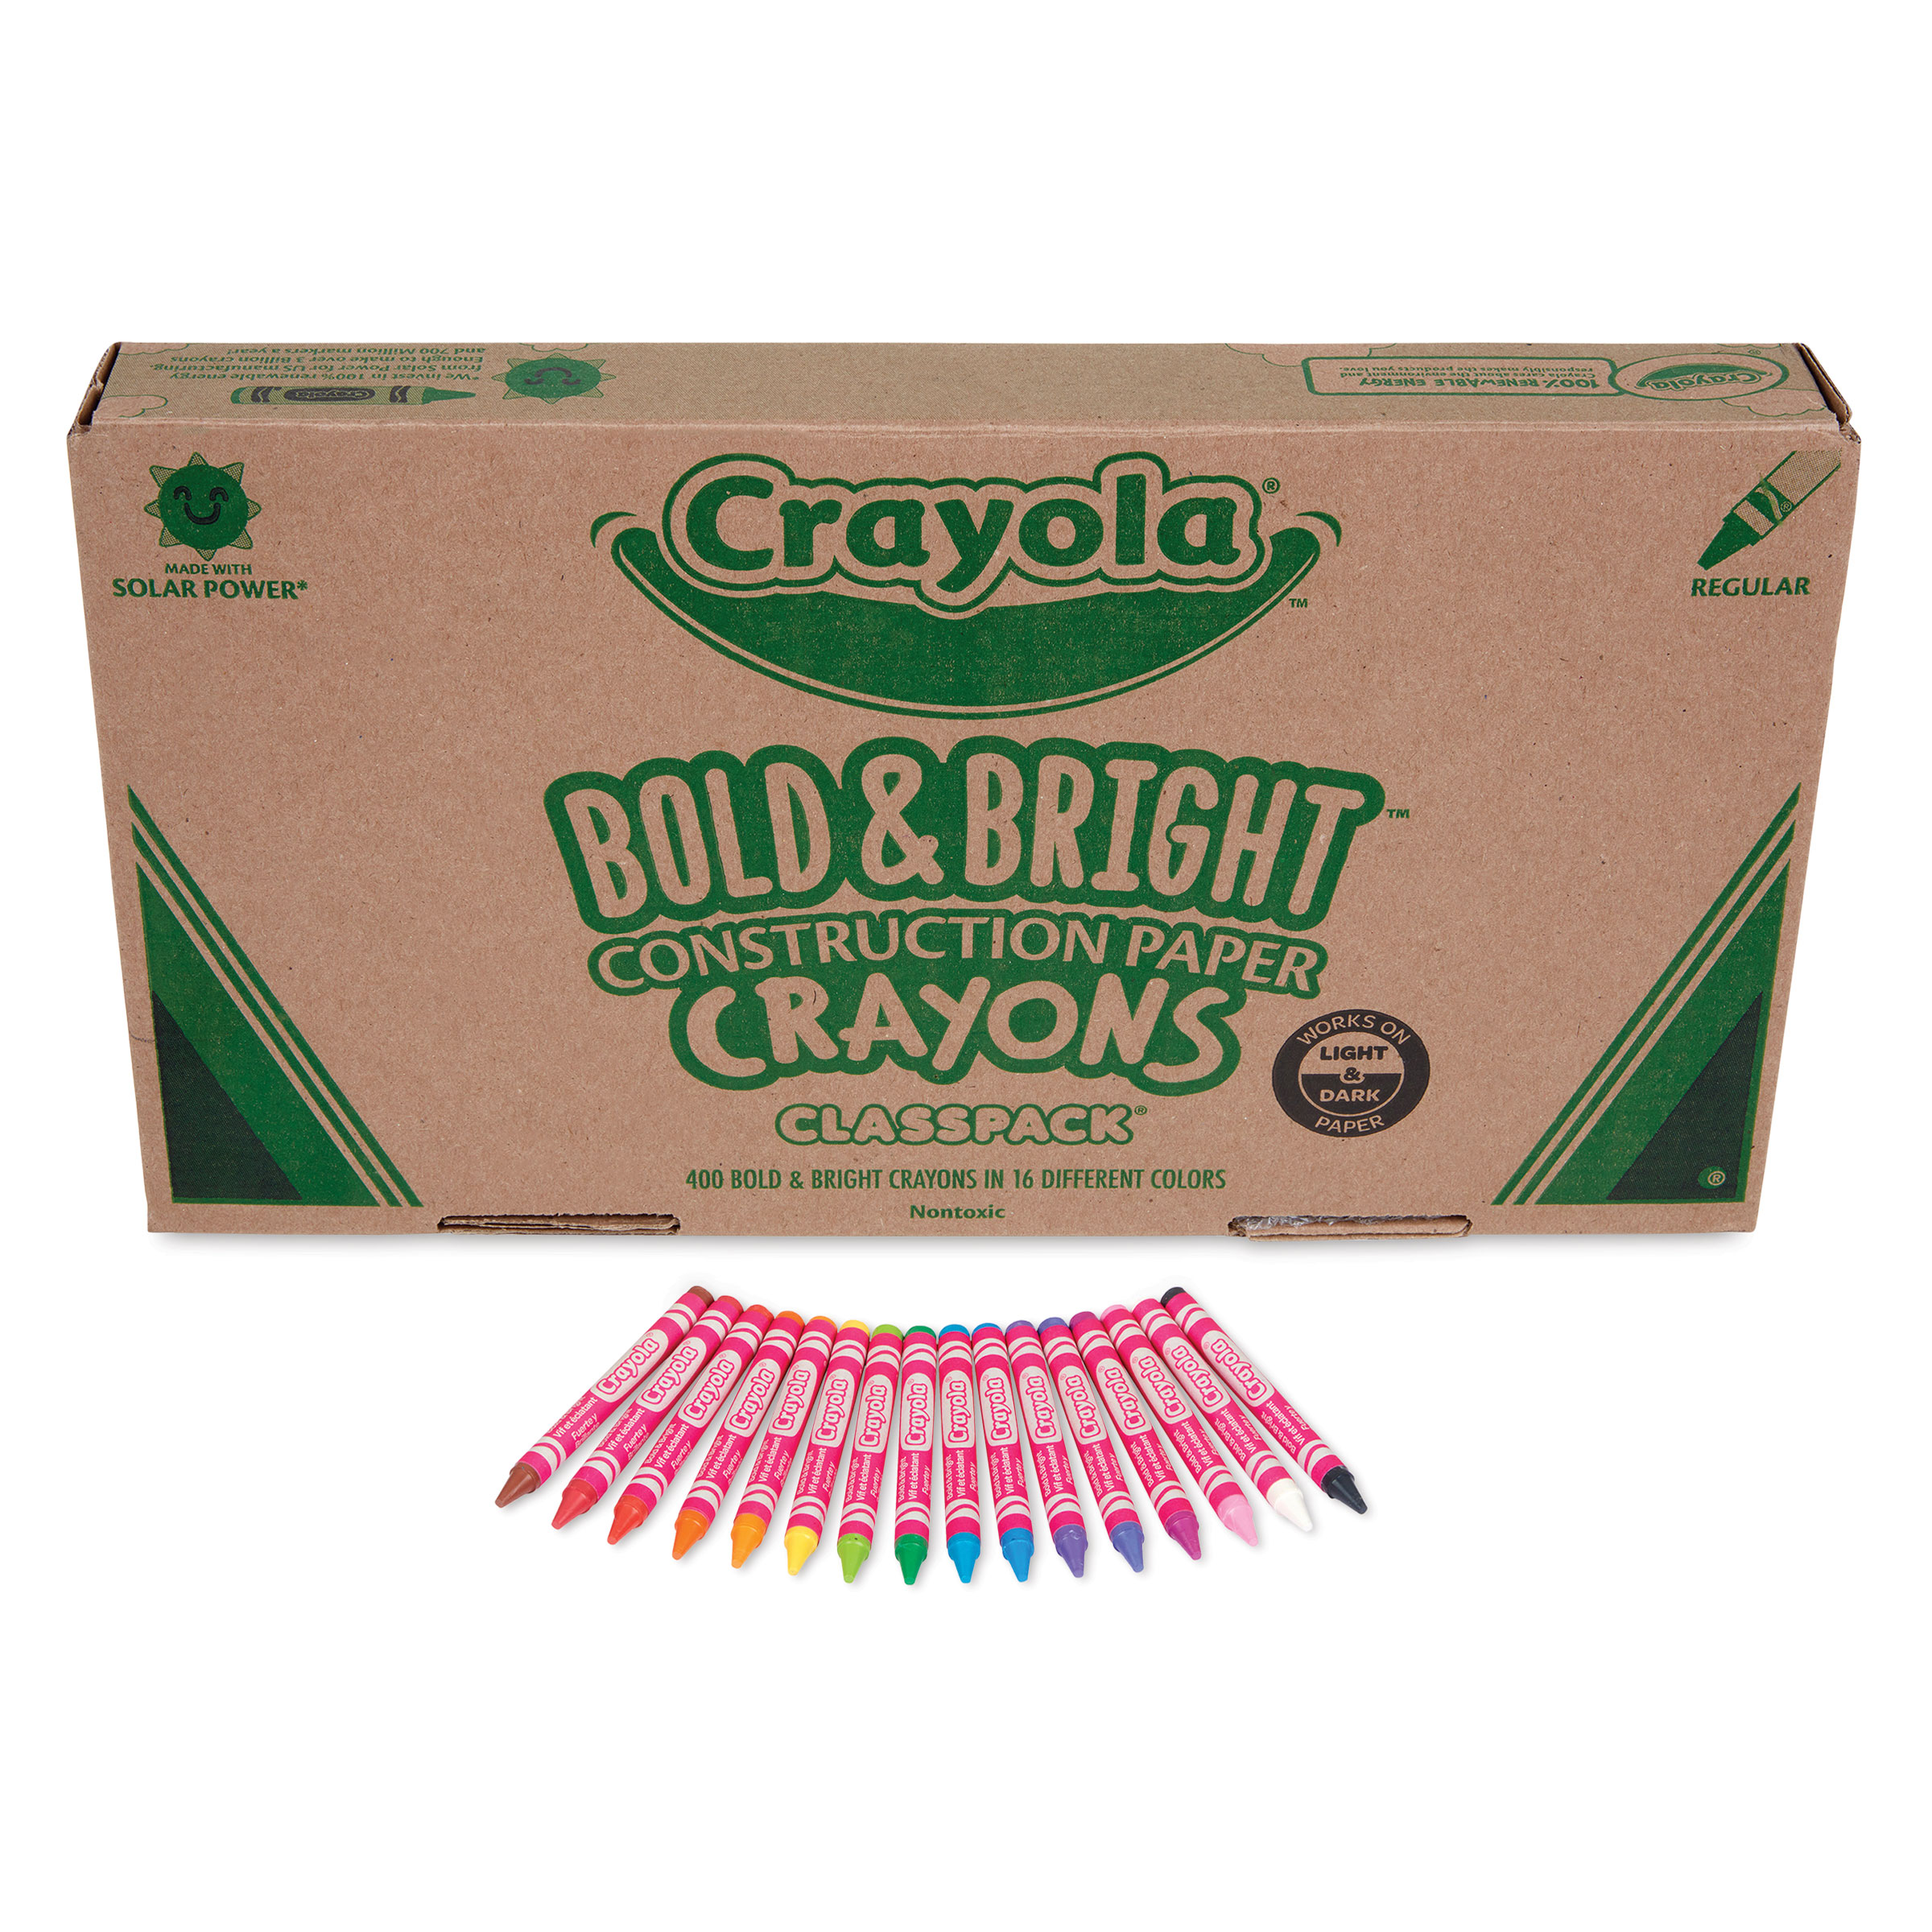 Crayola Metallic FX Crayons-16/Pkg - 071662088163